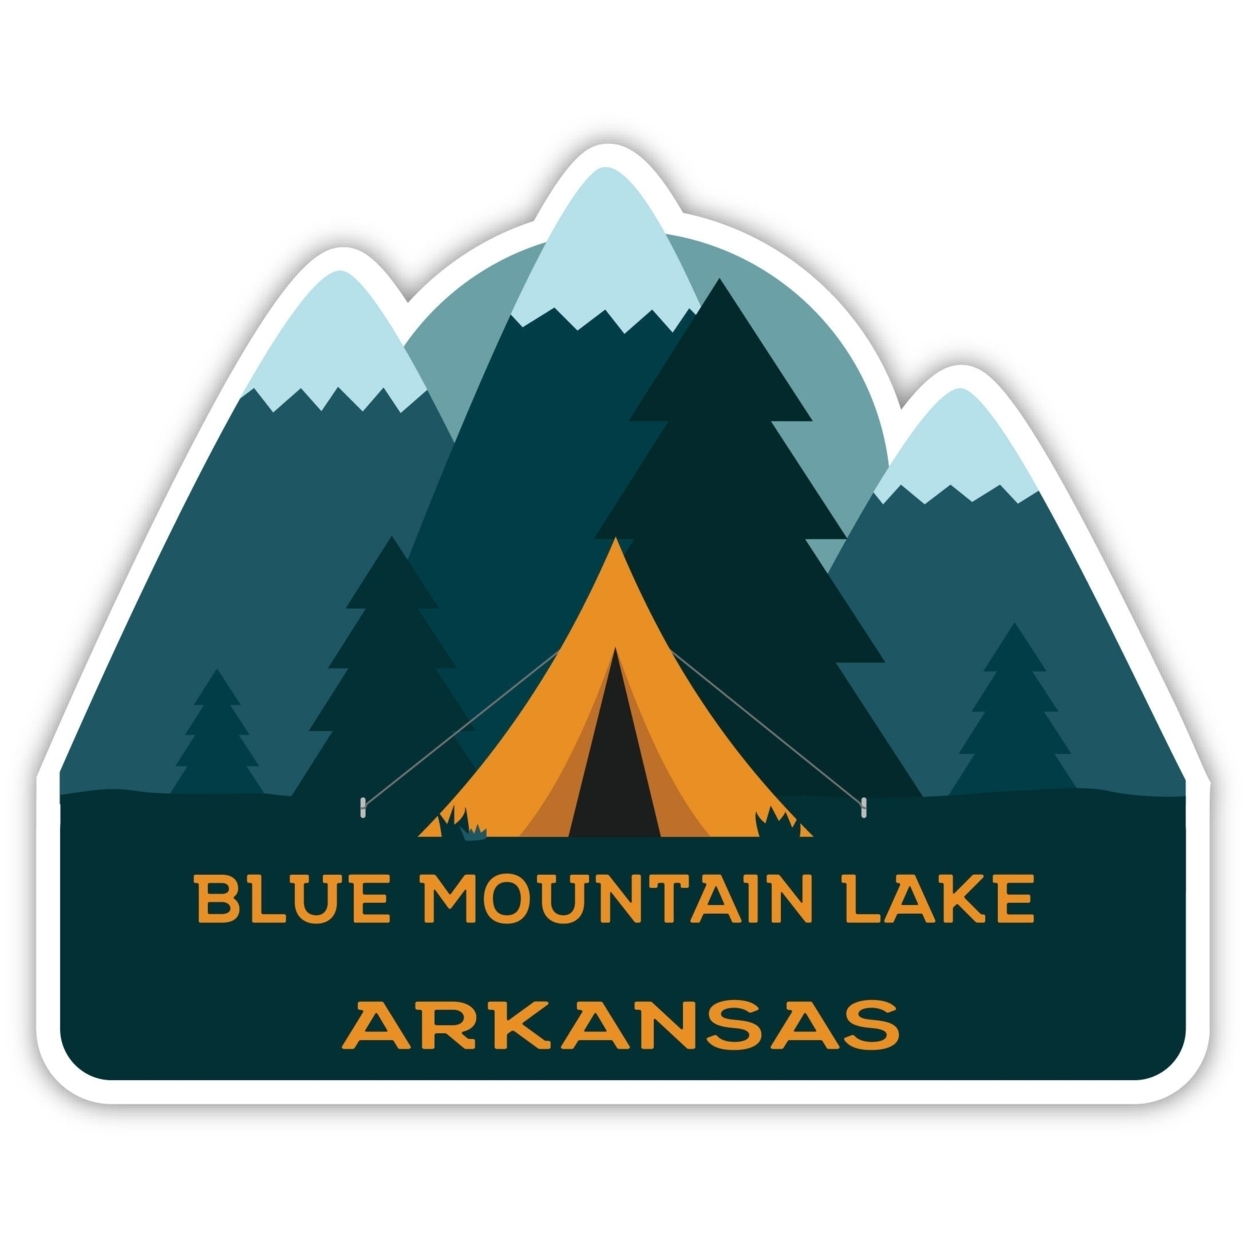 Blue Mountain Lake Arkansas Souvenir Decorative Stickers (Choose Theme And Size) - 4-Pack, 4-Inch, Tent